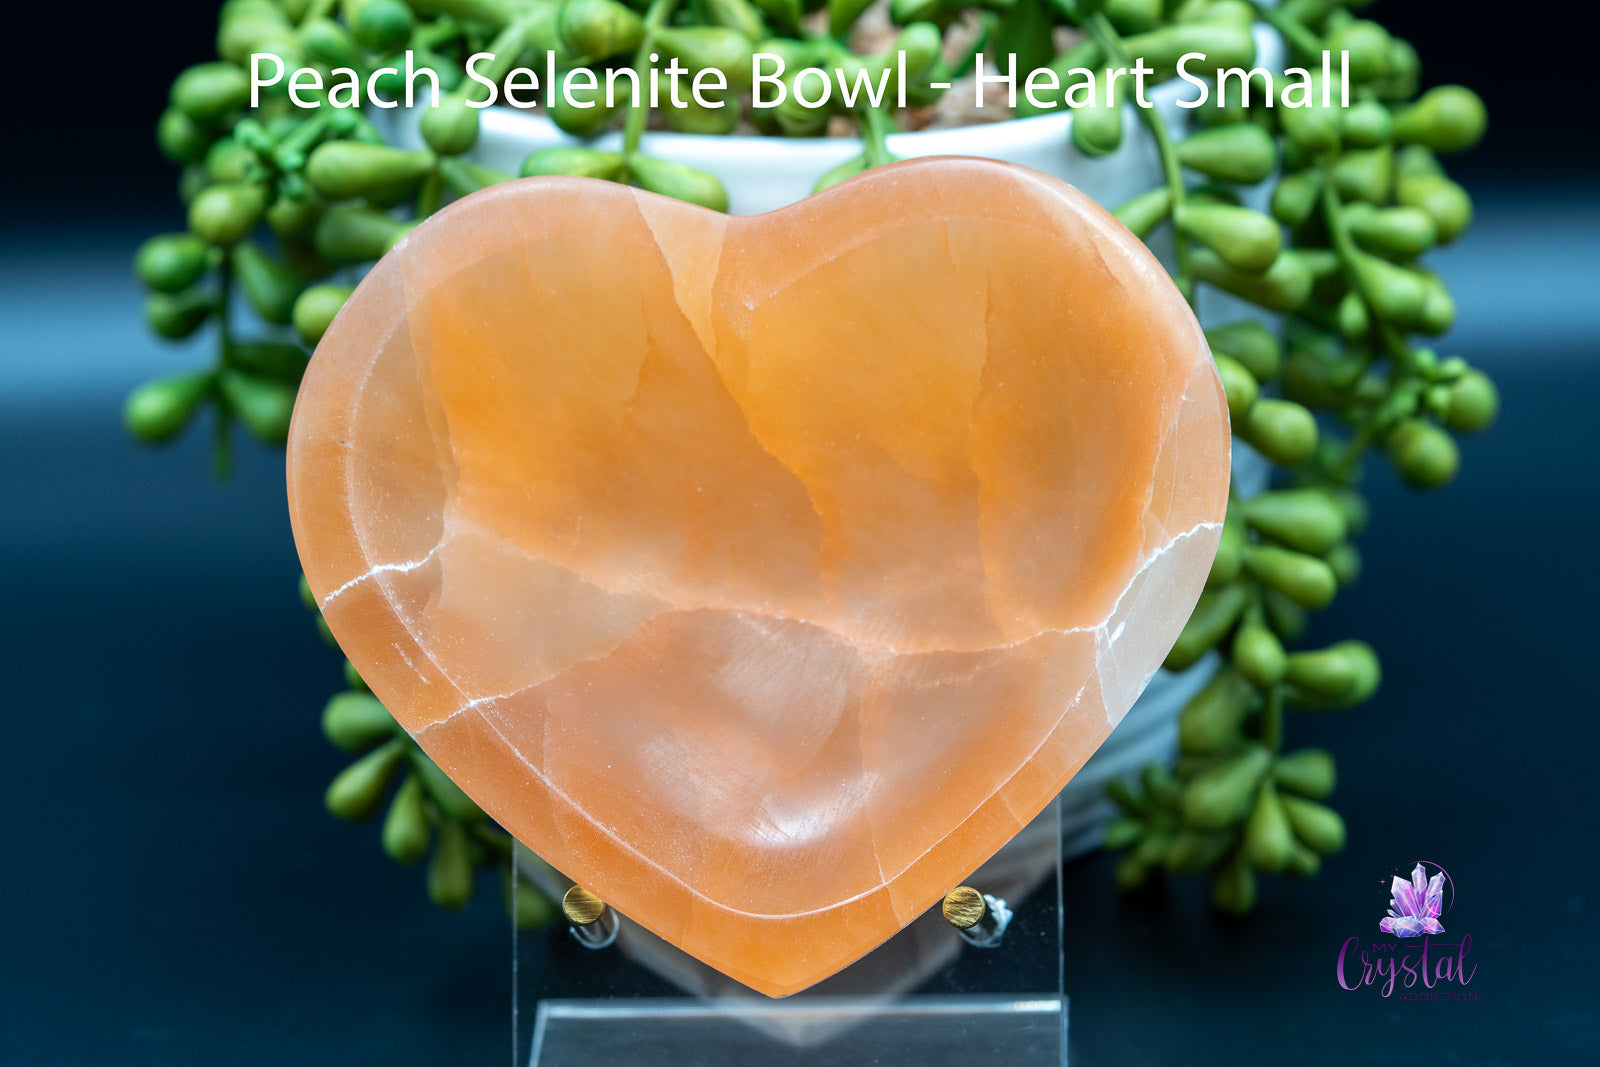 Peach Selenite Bowl - Heart 4" - My Crystal Addiction